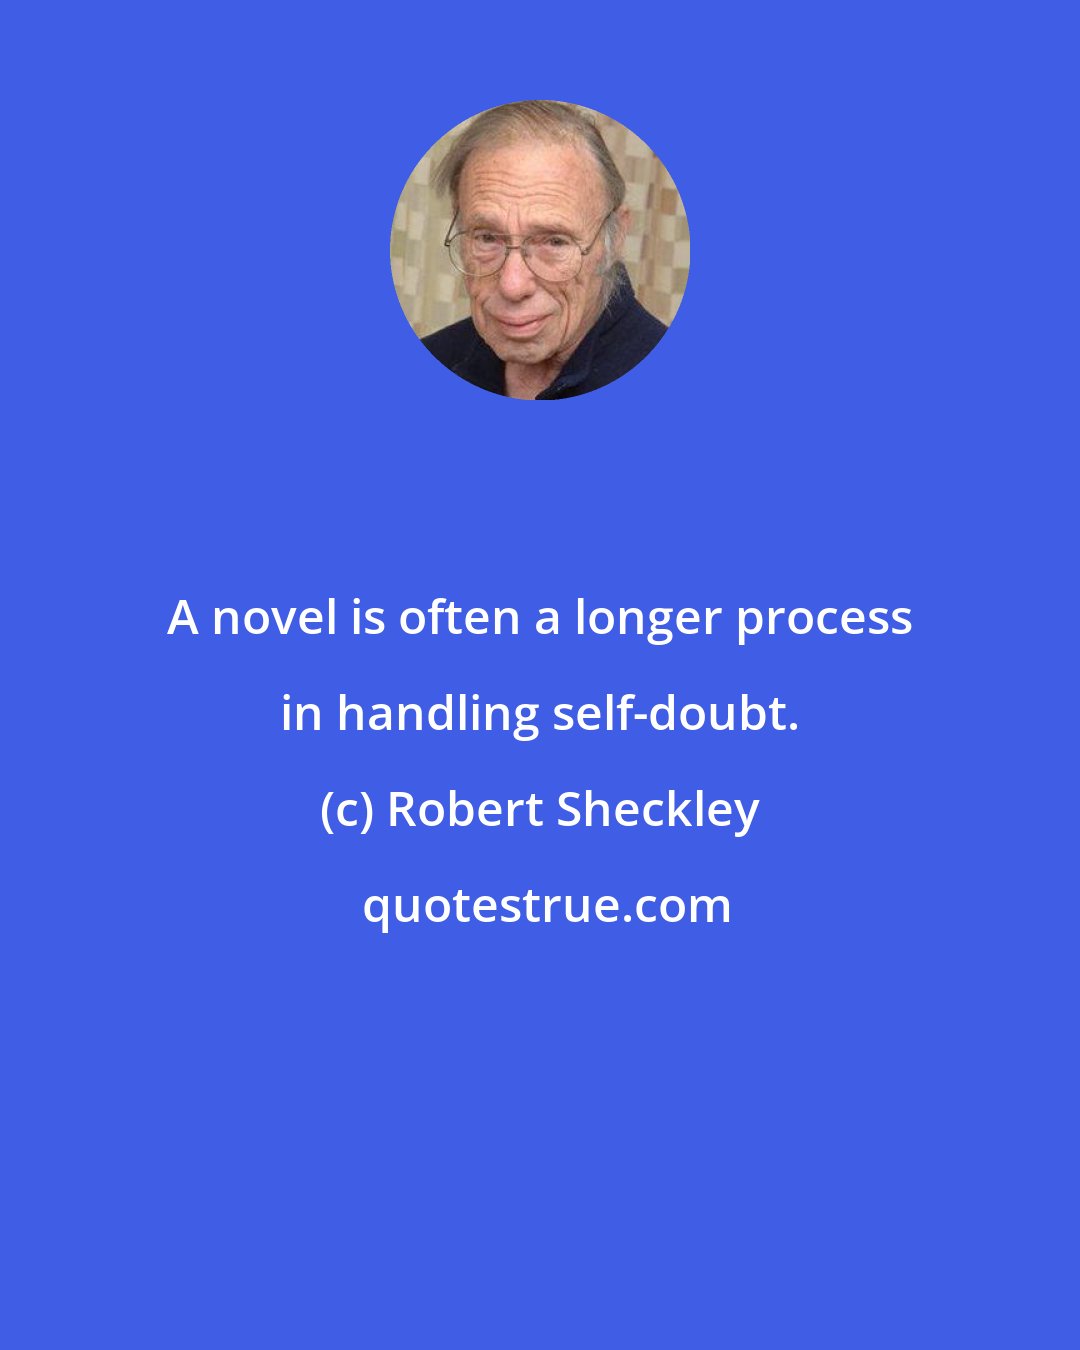 Robert Sheckley: A novel is often a longer process in handling self-doubt.